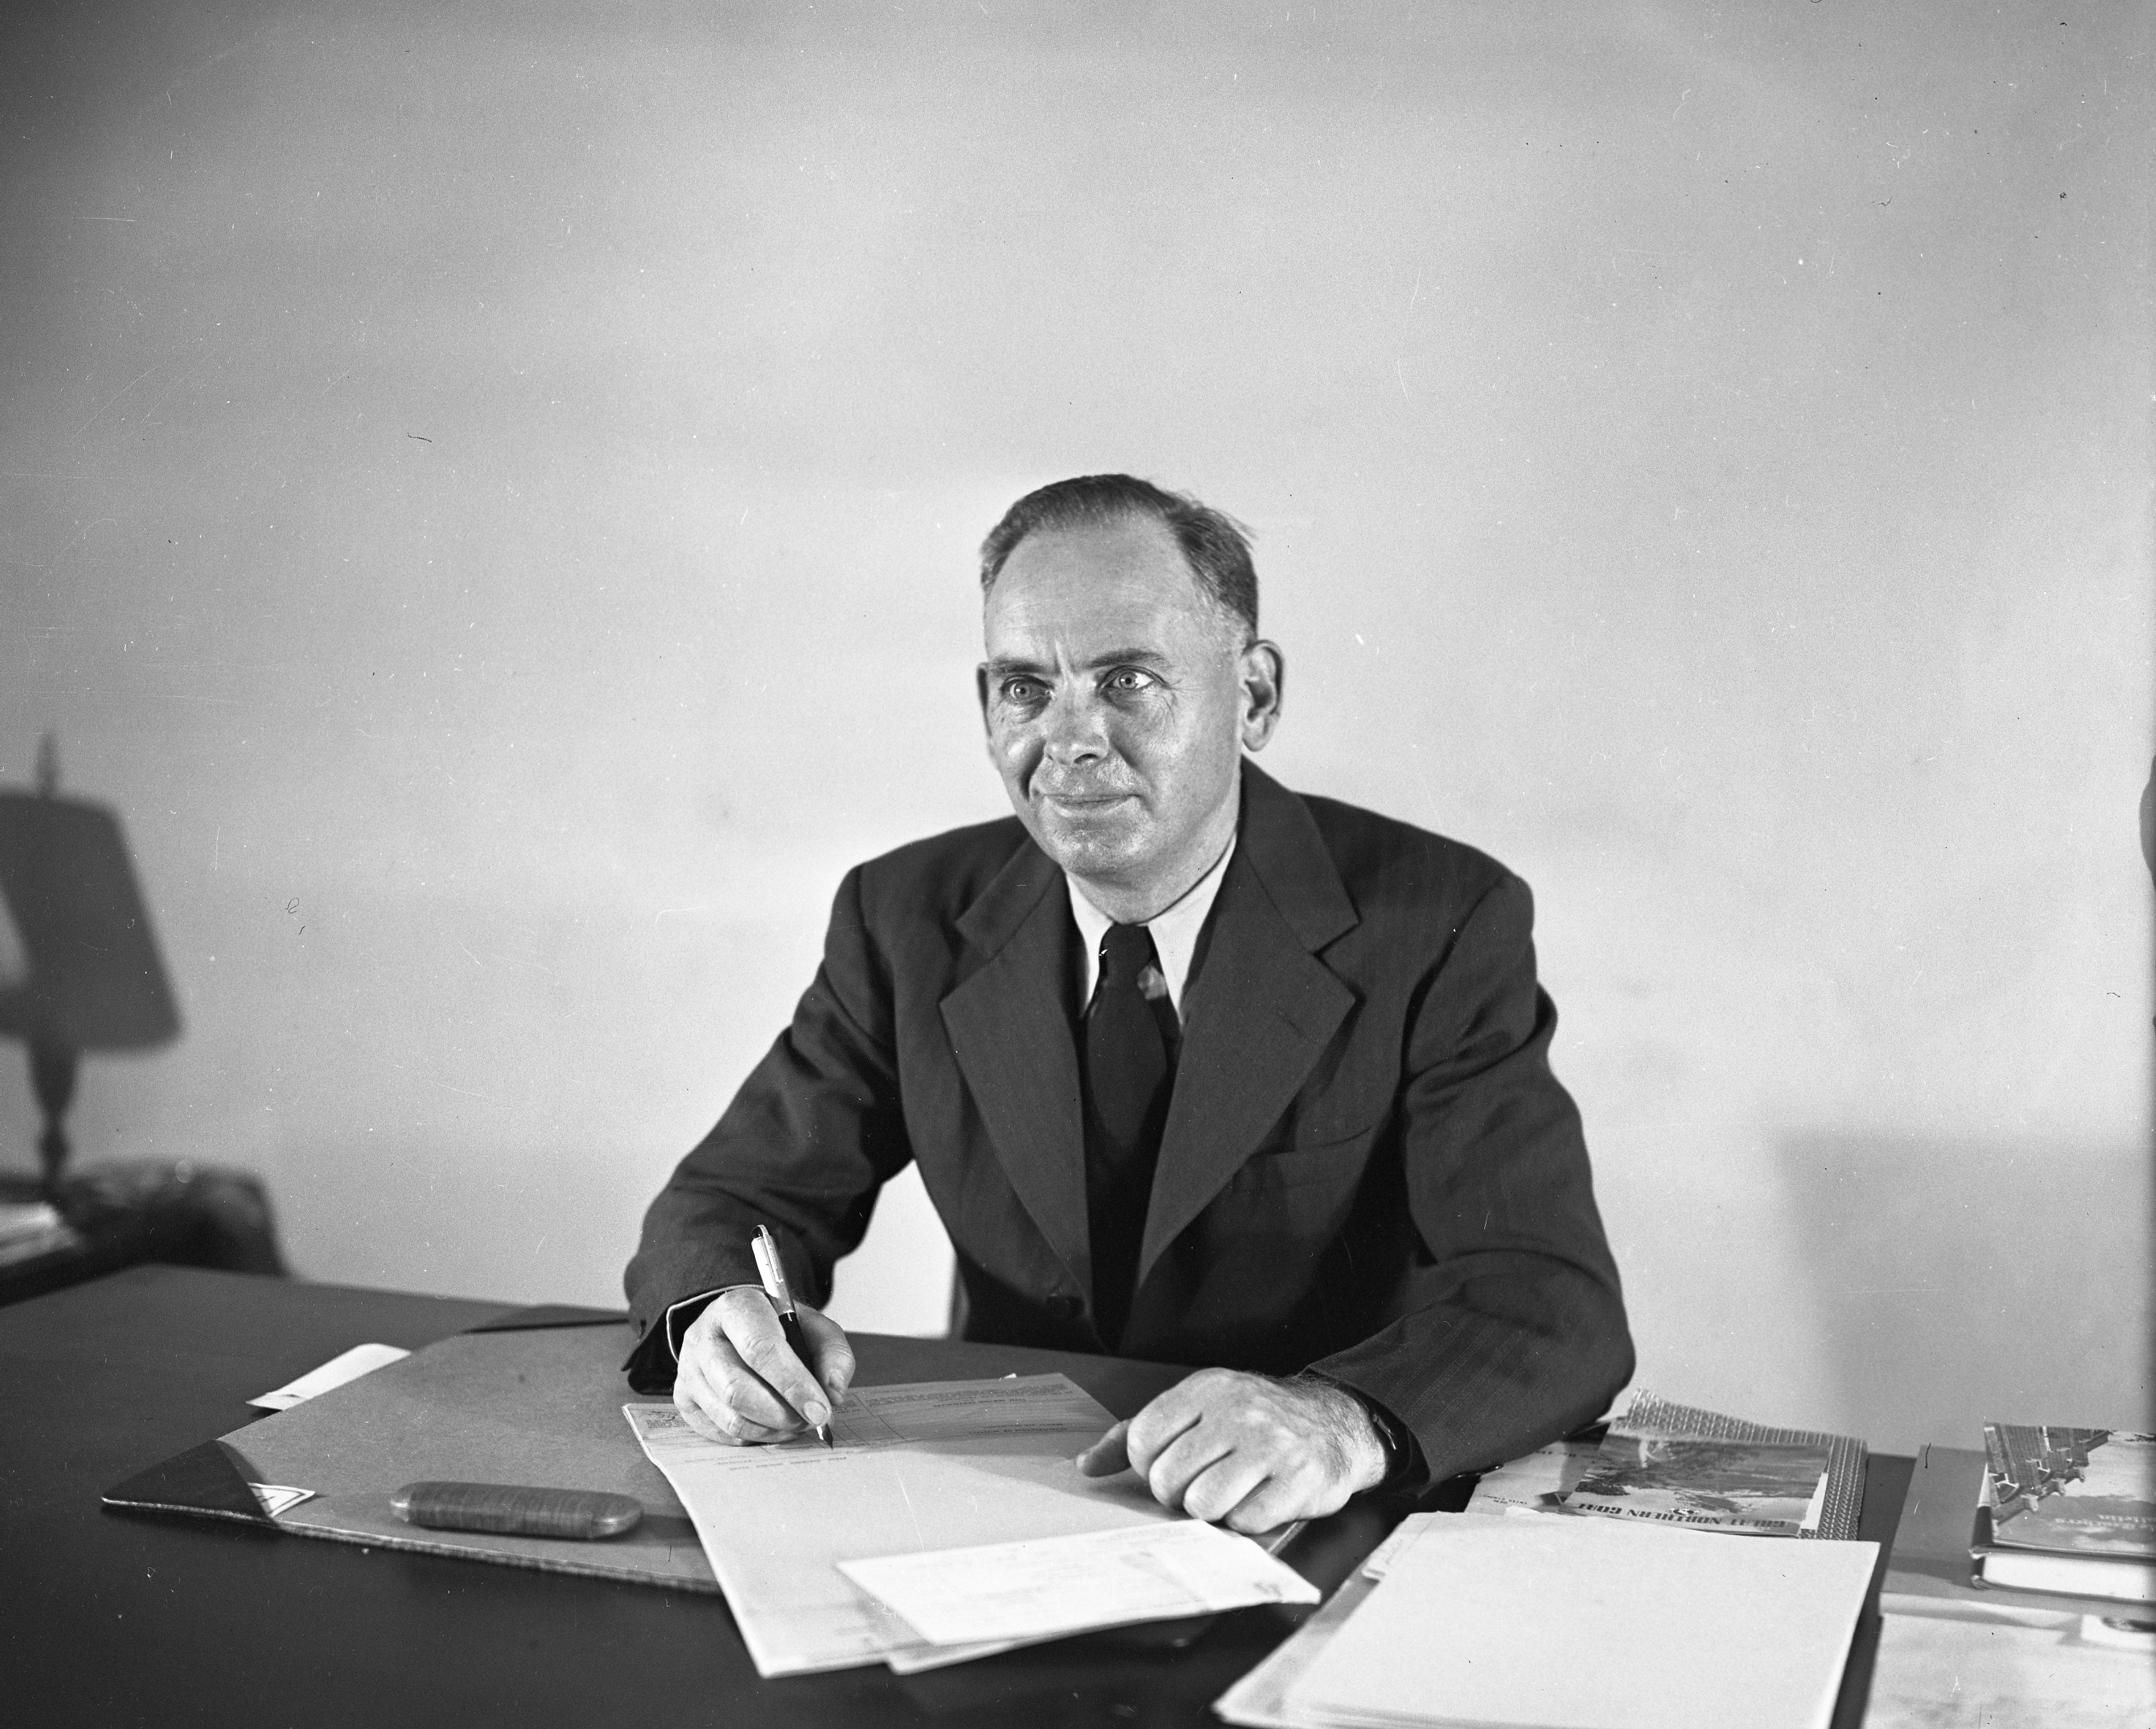 President Charles Sattgast